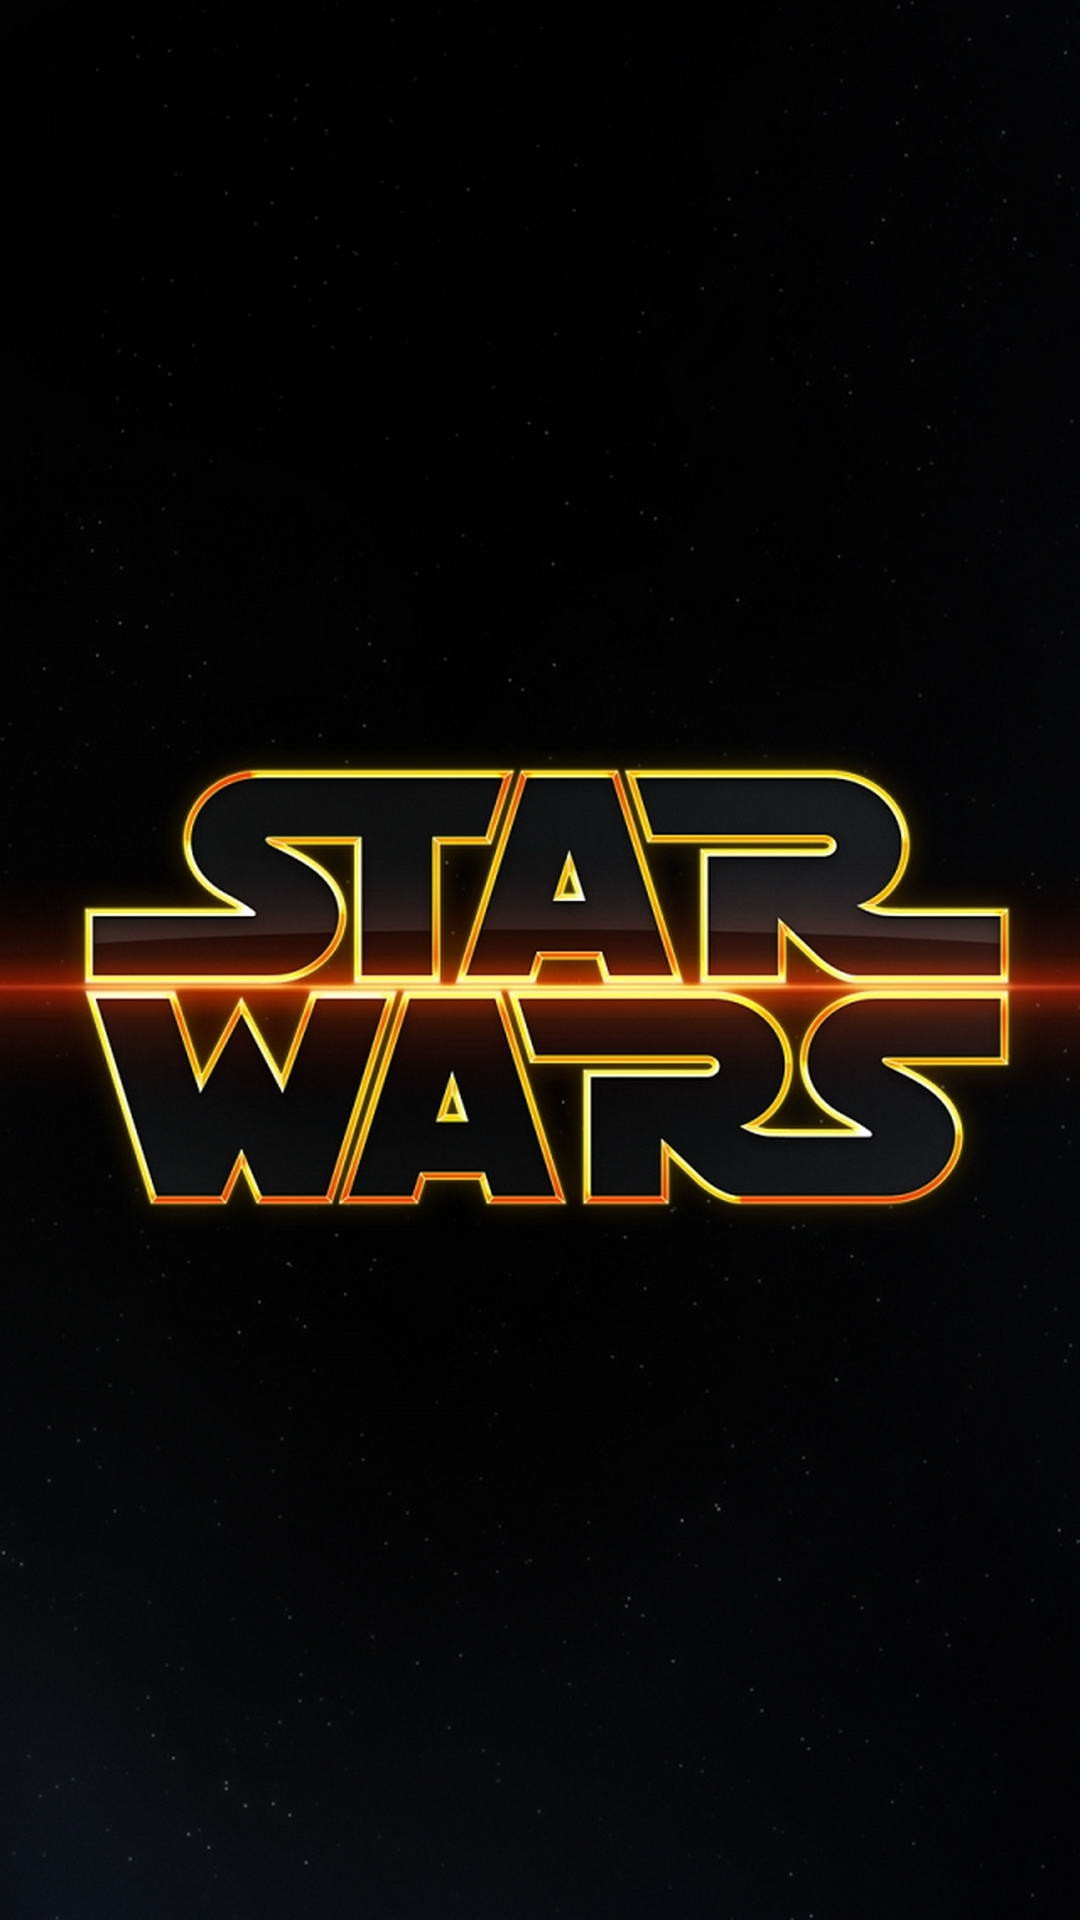 1080x1920 Star Wars Logo â Download more Star Wars iPhone Wallpapers at  @prettywallpaper Luke Skywalker!